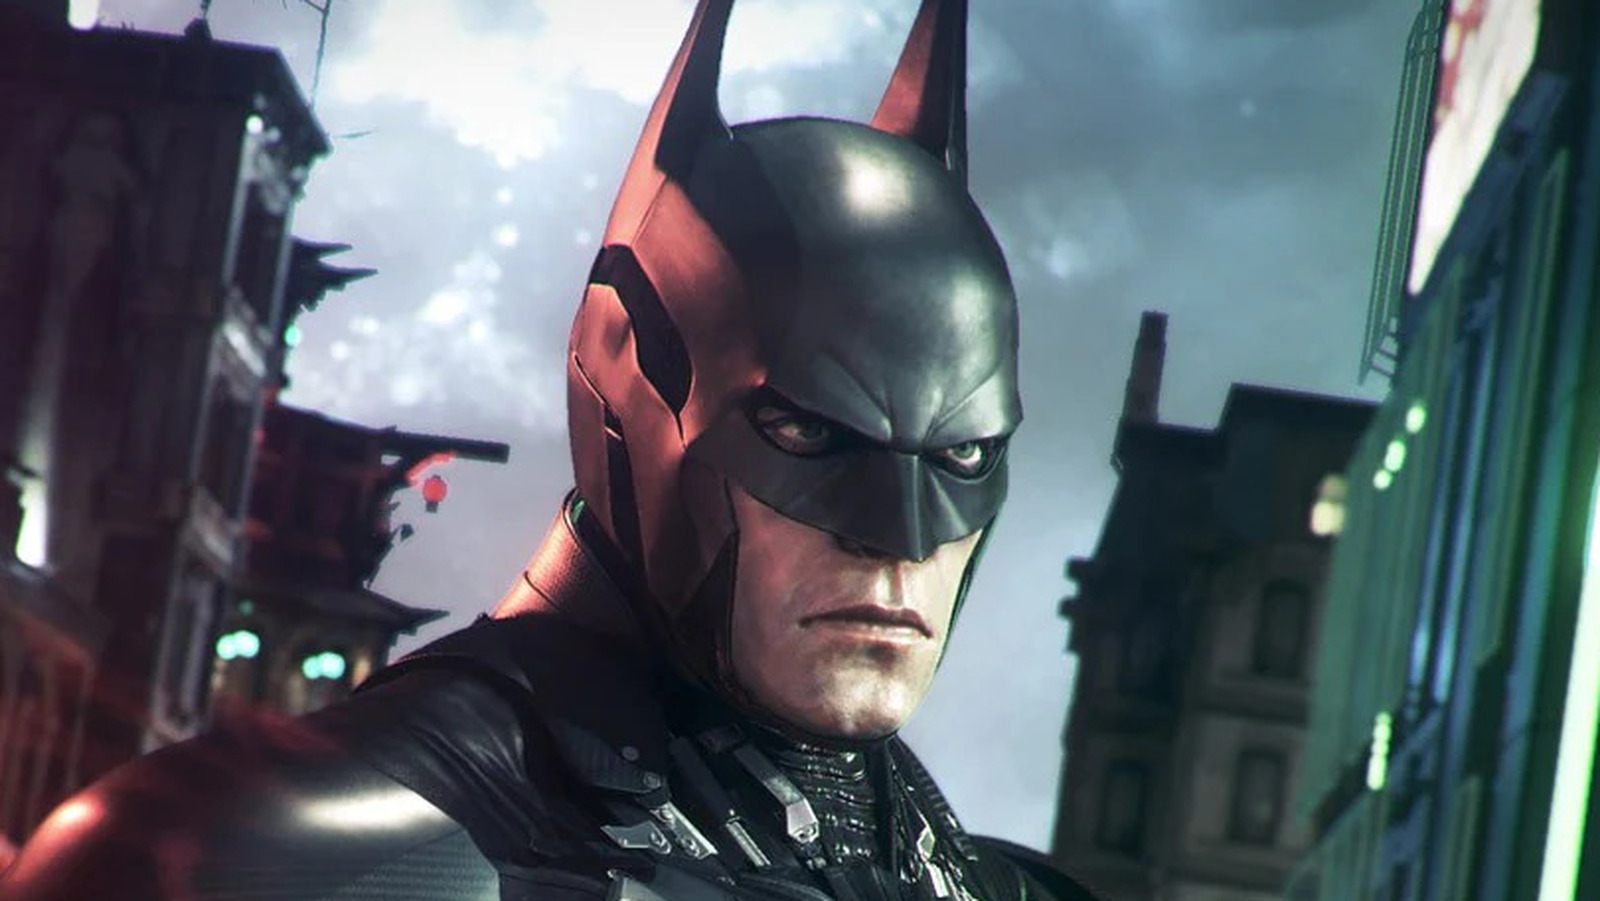 Animated Batman Beyond mod for Batman Arkham City by